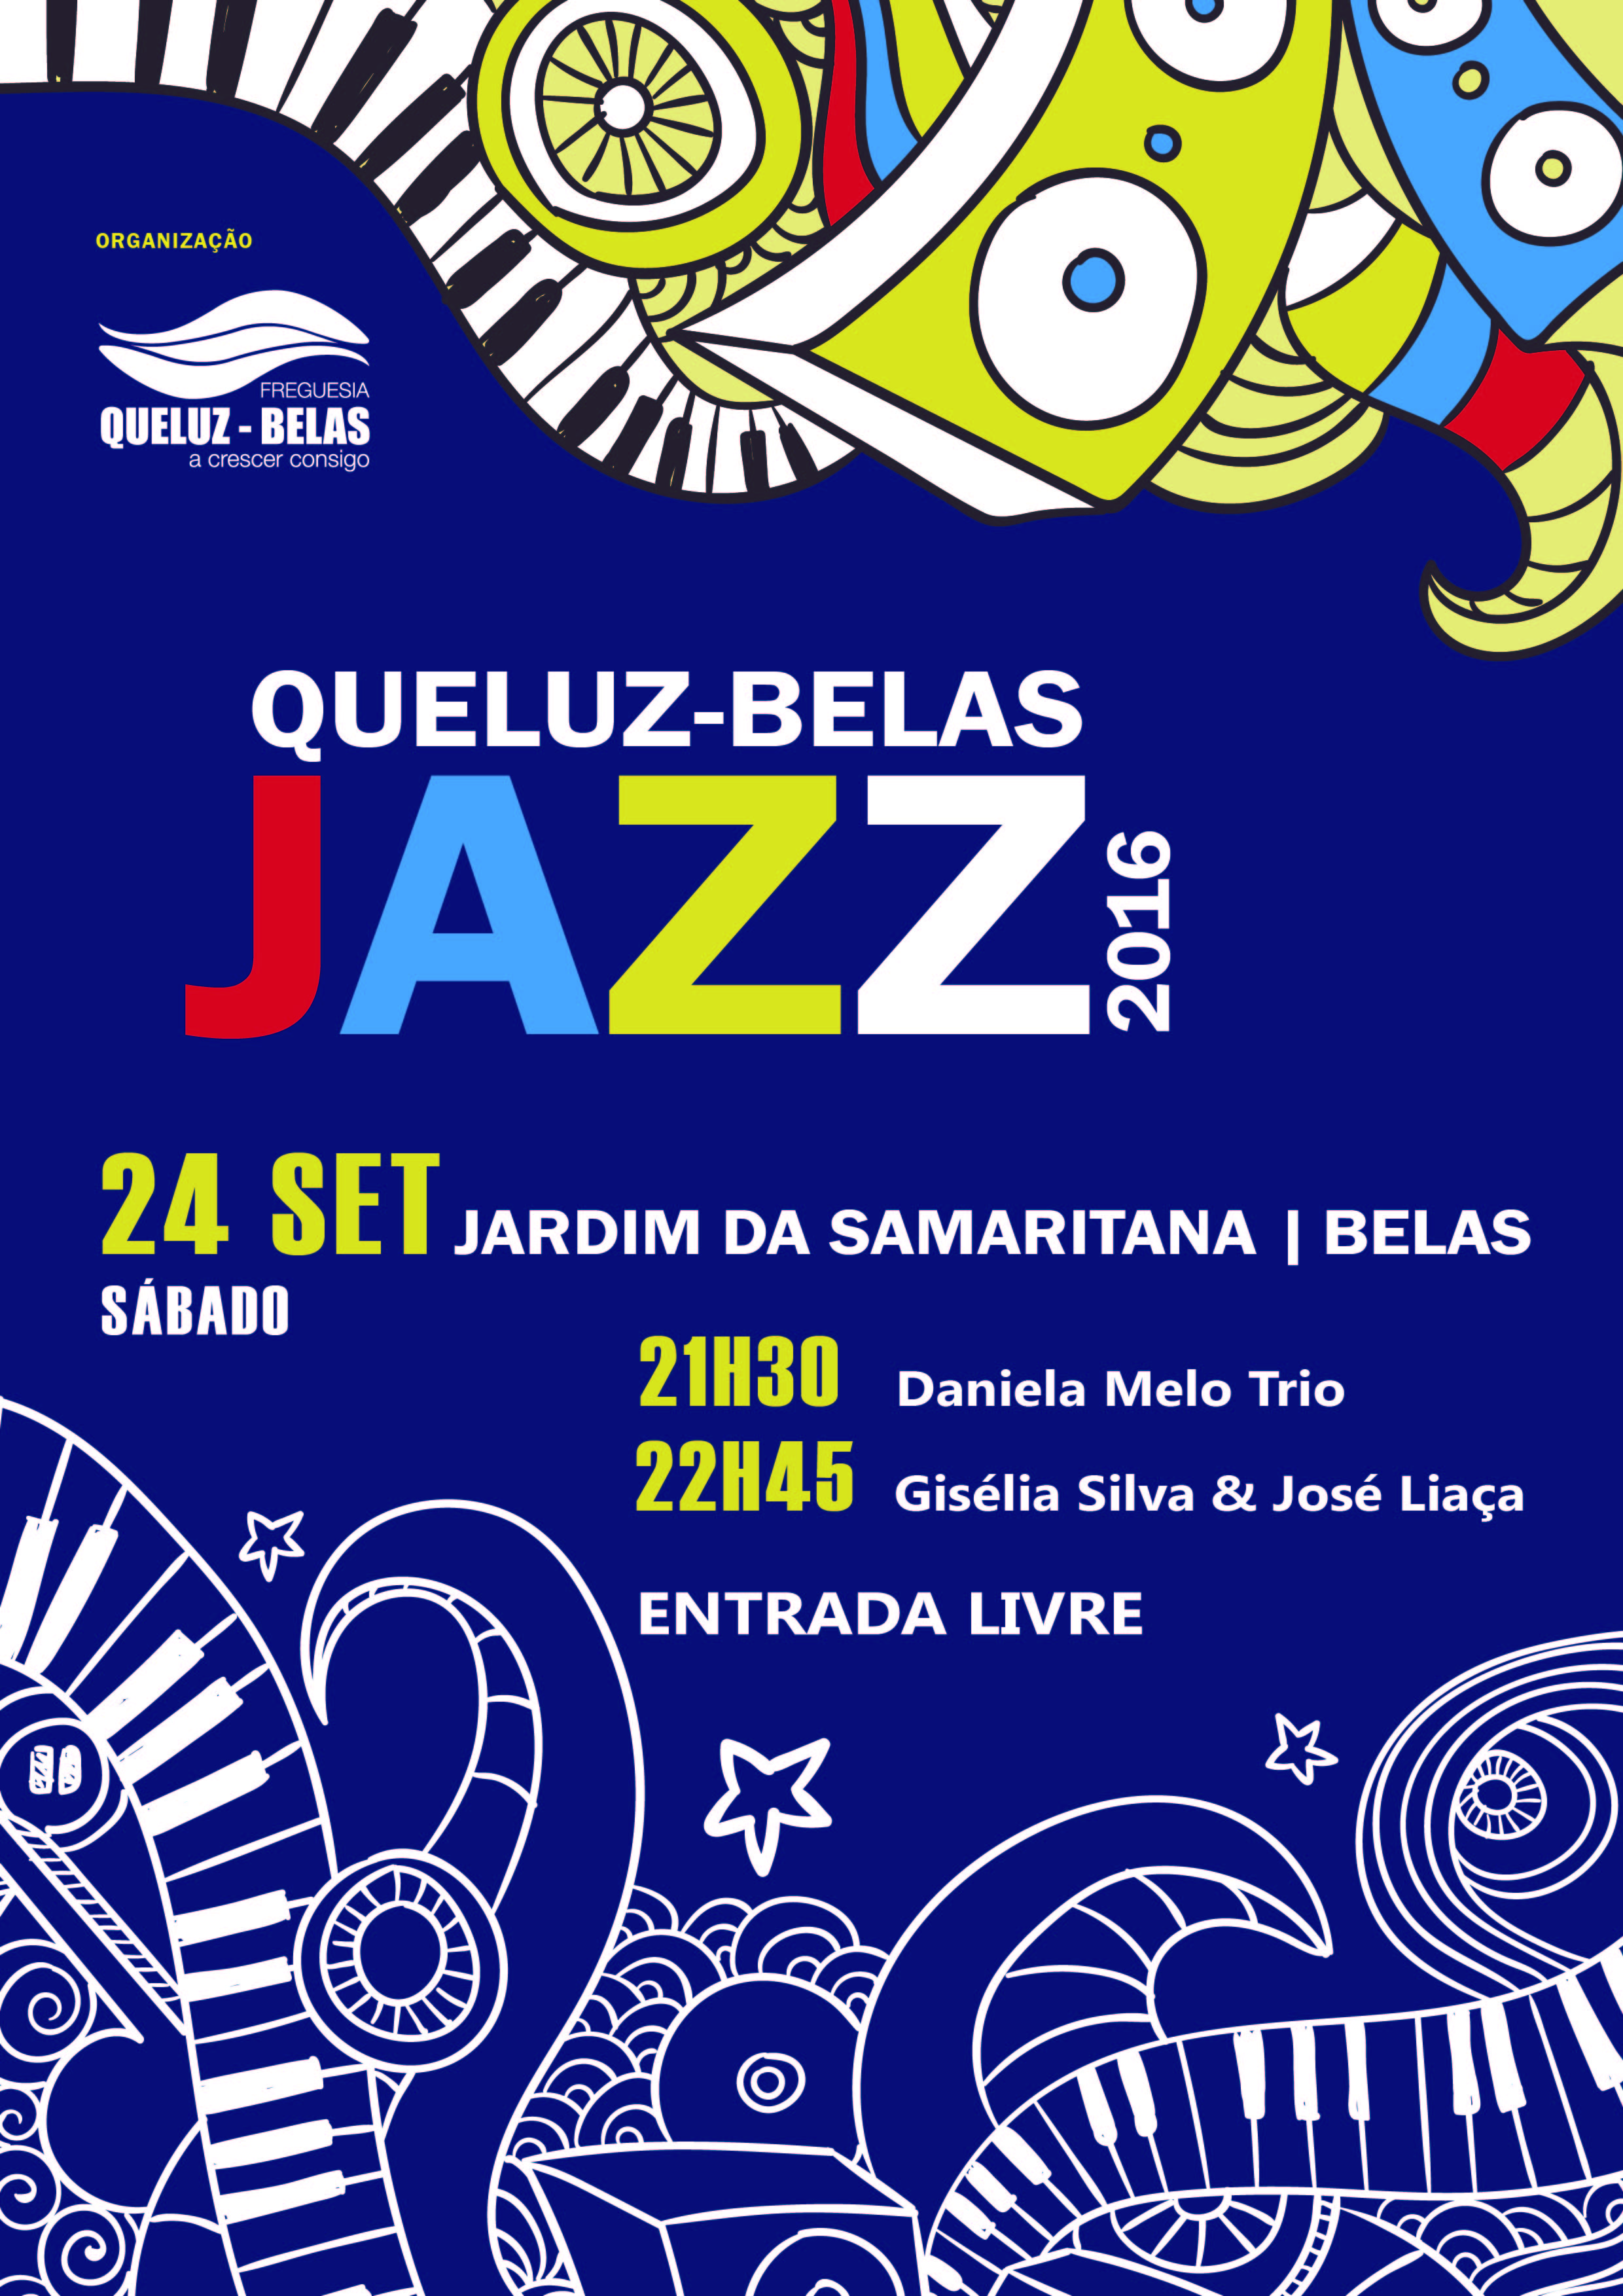 Queluz-Belas Jazz 2016 Jardim da Samaritana - Belas